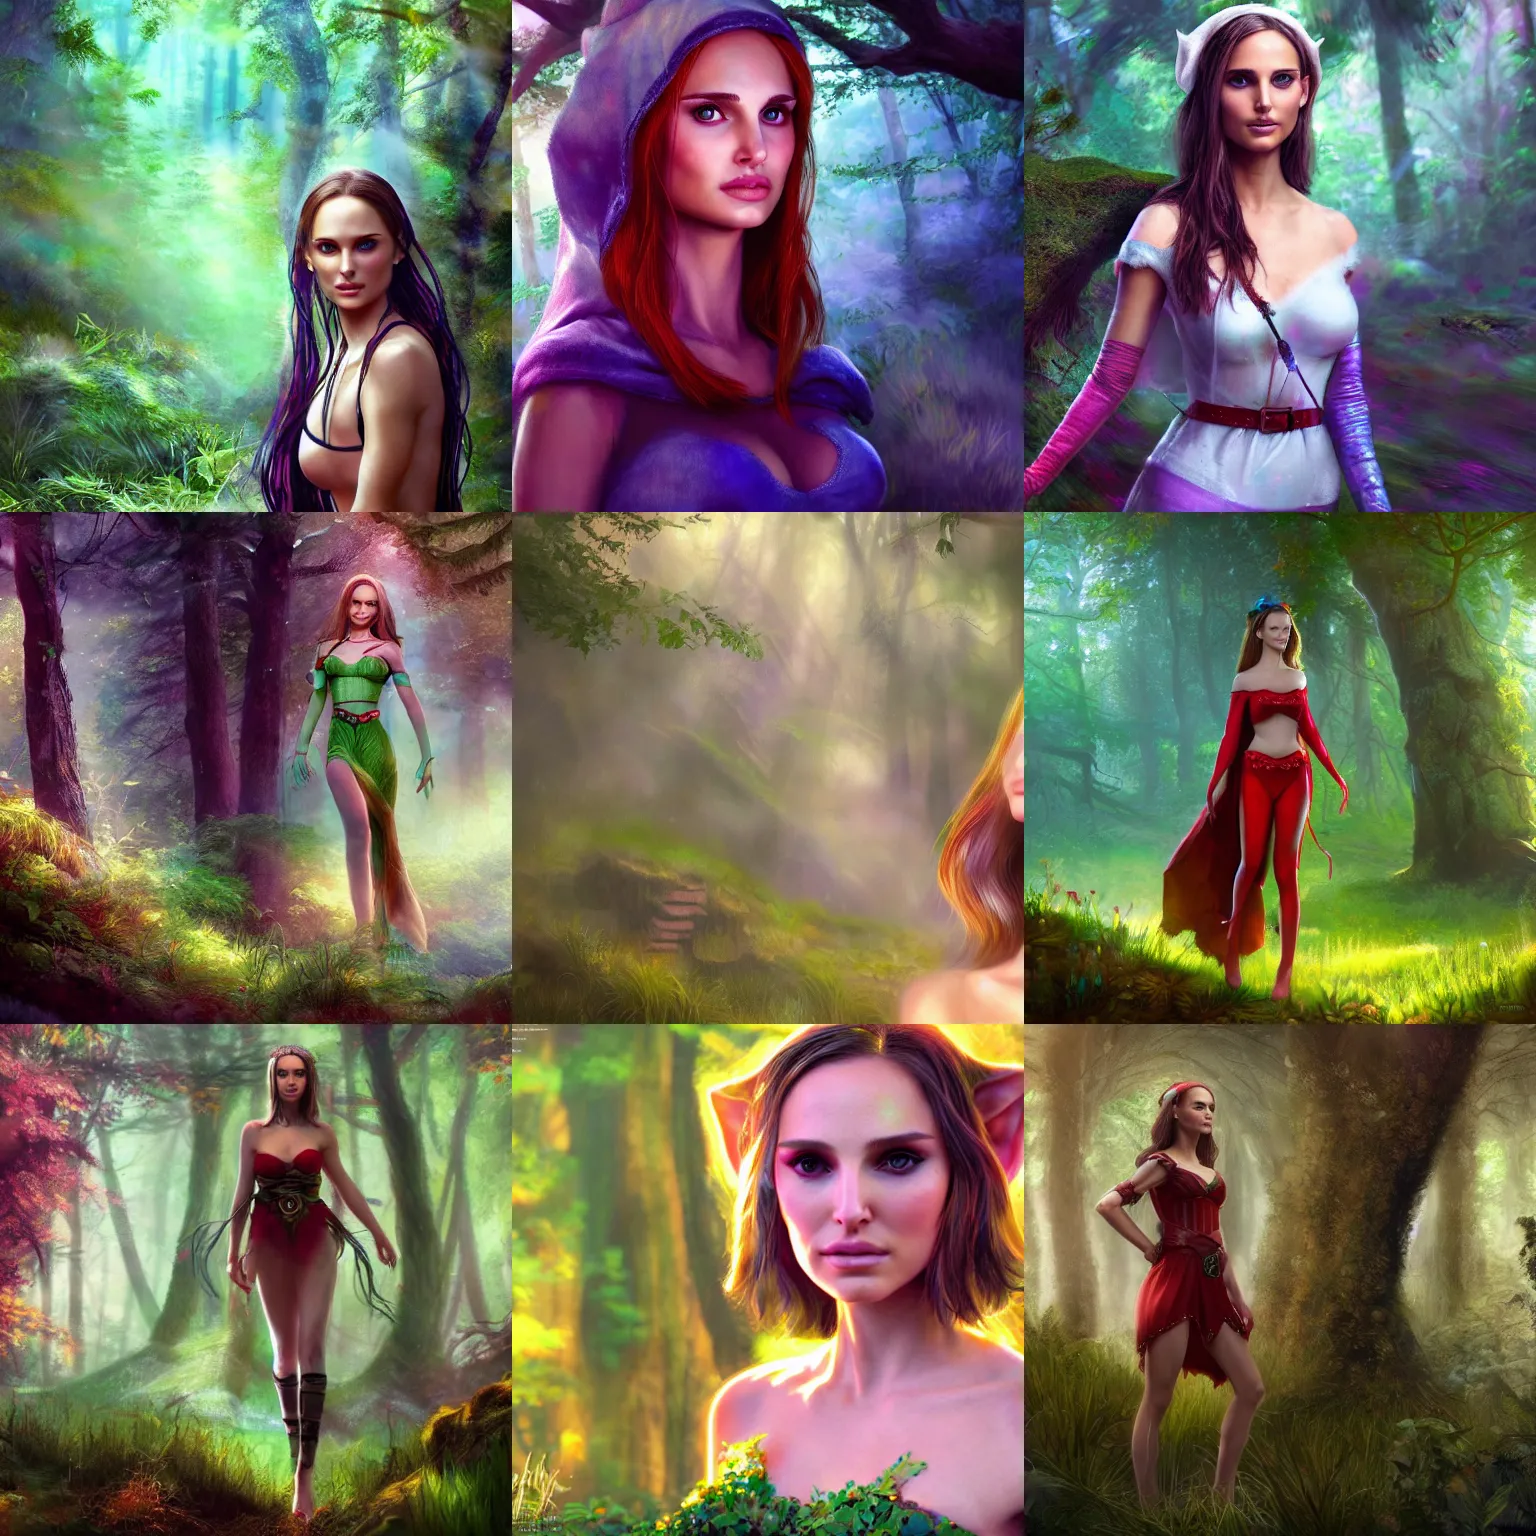 Prompt: elf girl (model: Natalie Portman), in a forest, ethereal, colorful, portrait, fantasy, artstation, 4k, Unreal Engine, photorealism, cinematic wallpaper